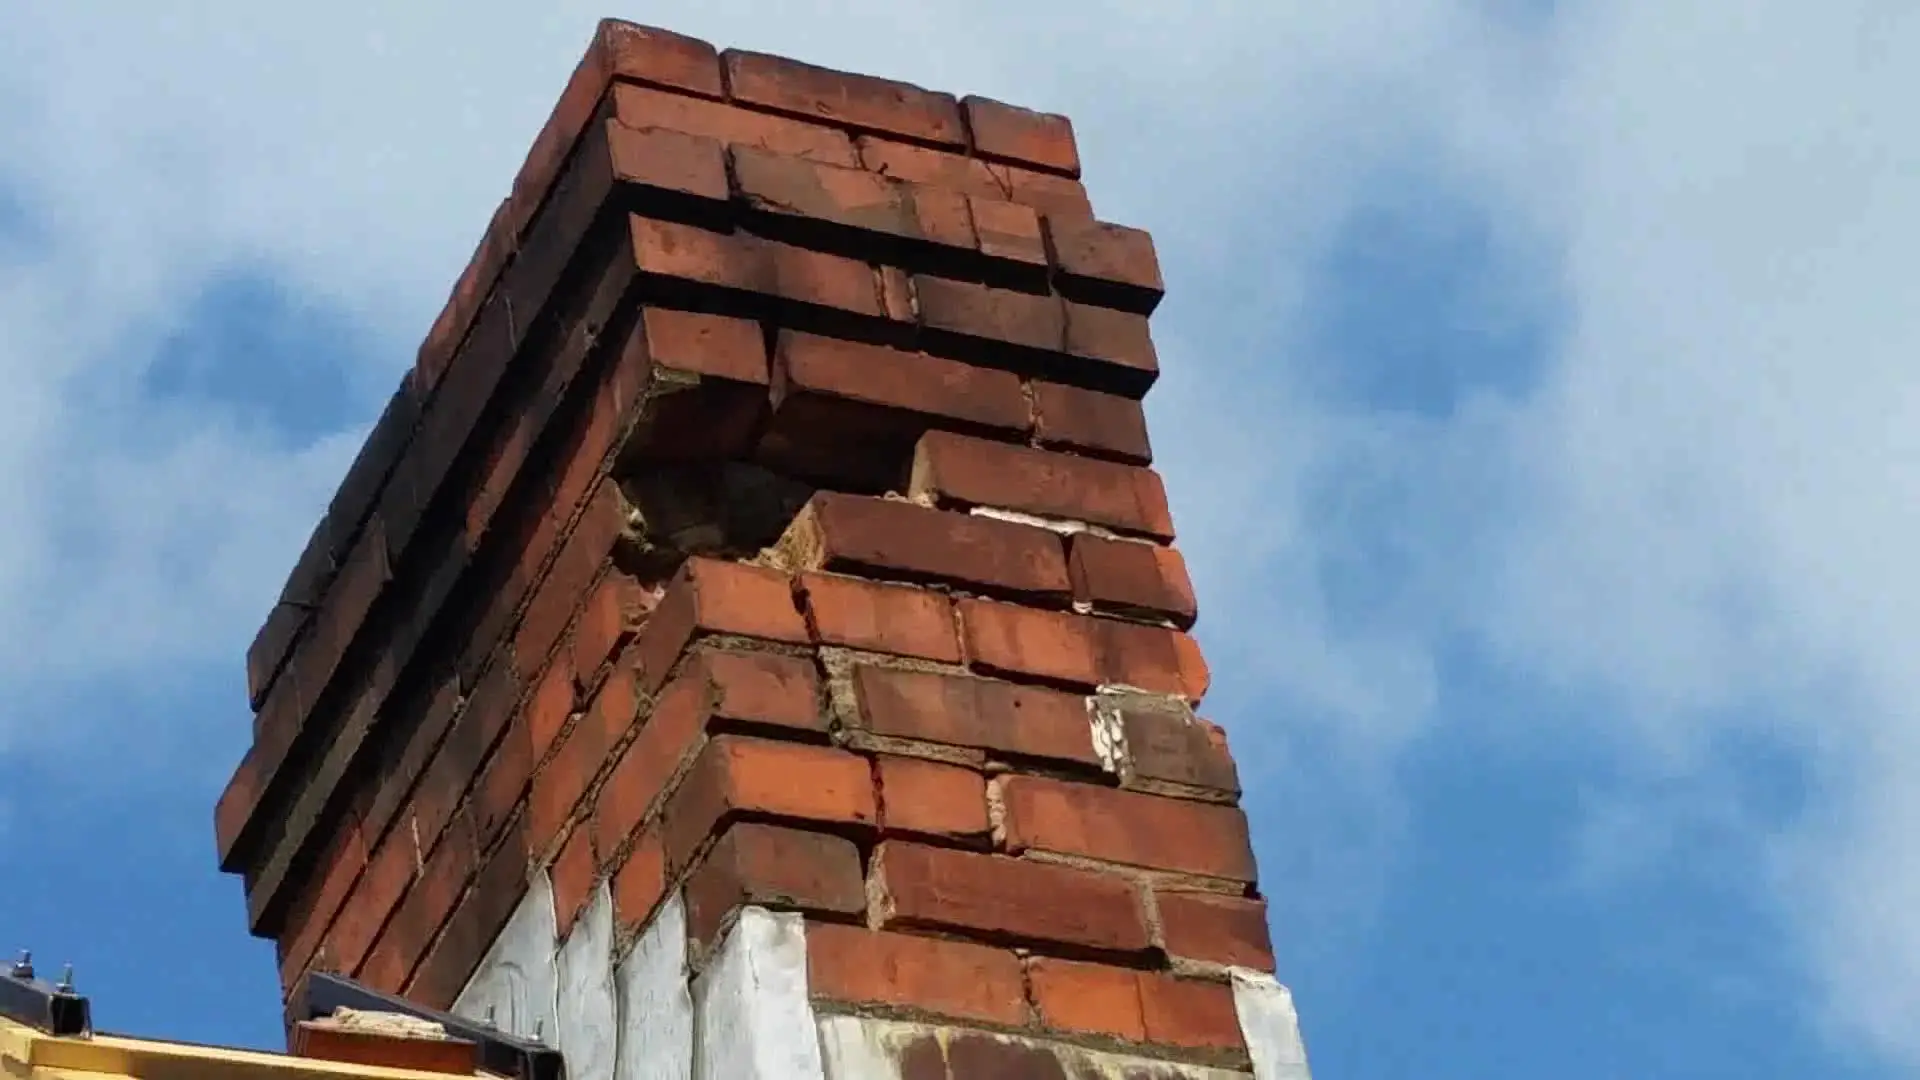 damaged chimney in need of repair